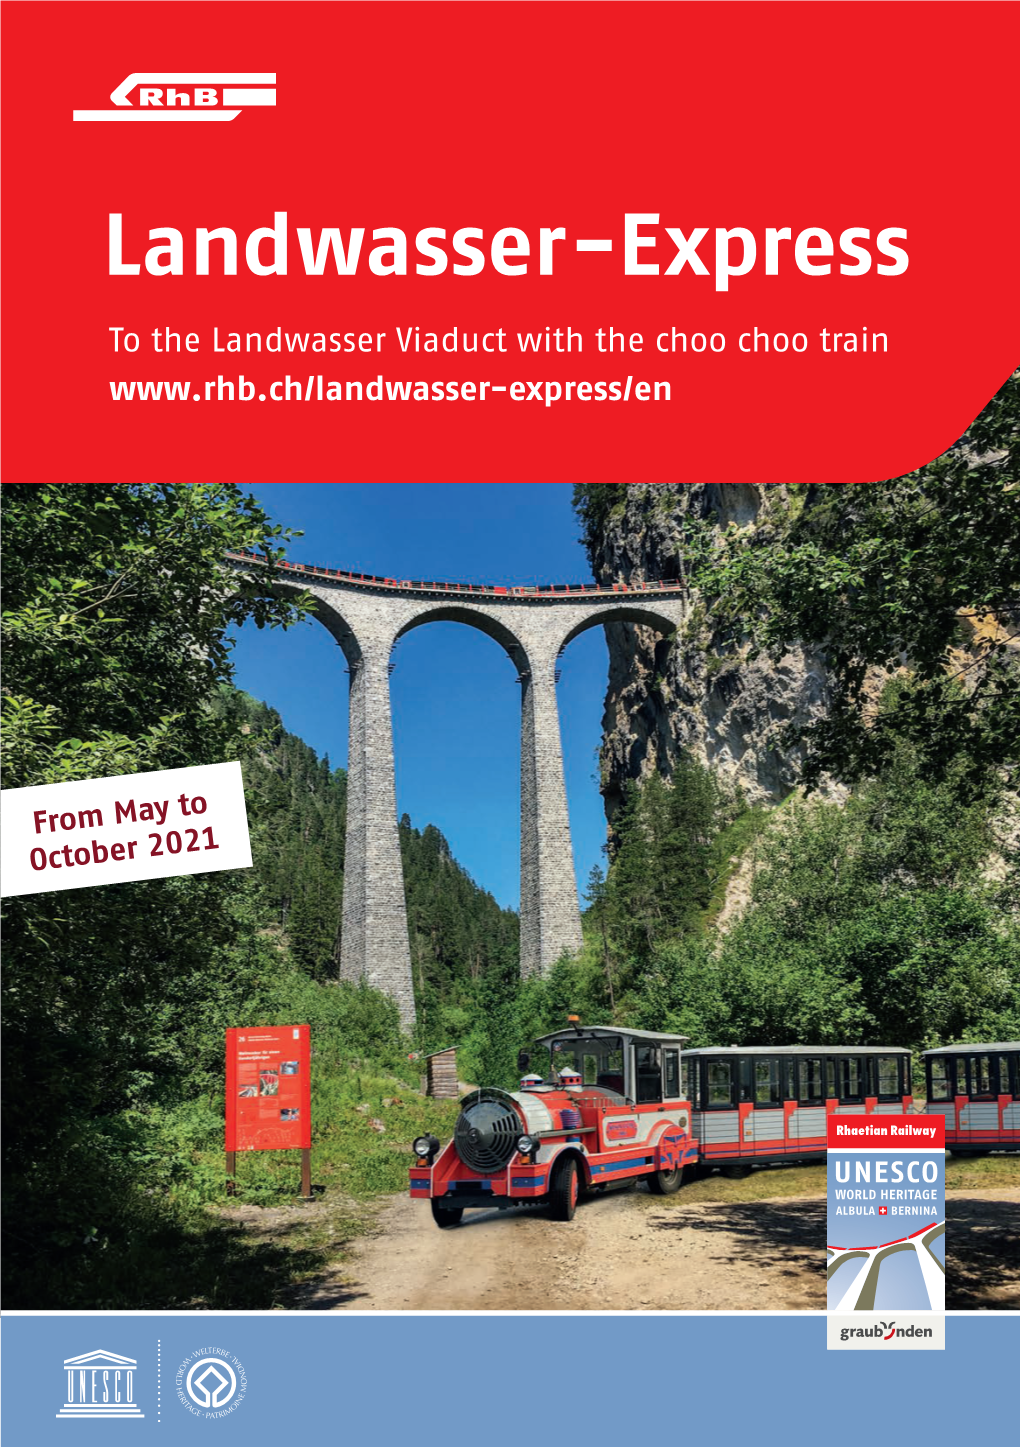 Landwasser-Express to the Landwasser Viaduct with the Choo Choo Train